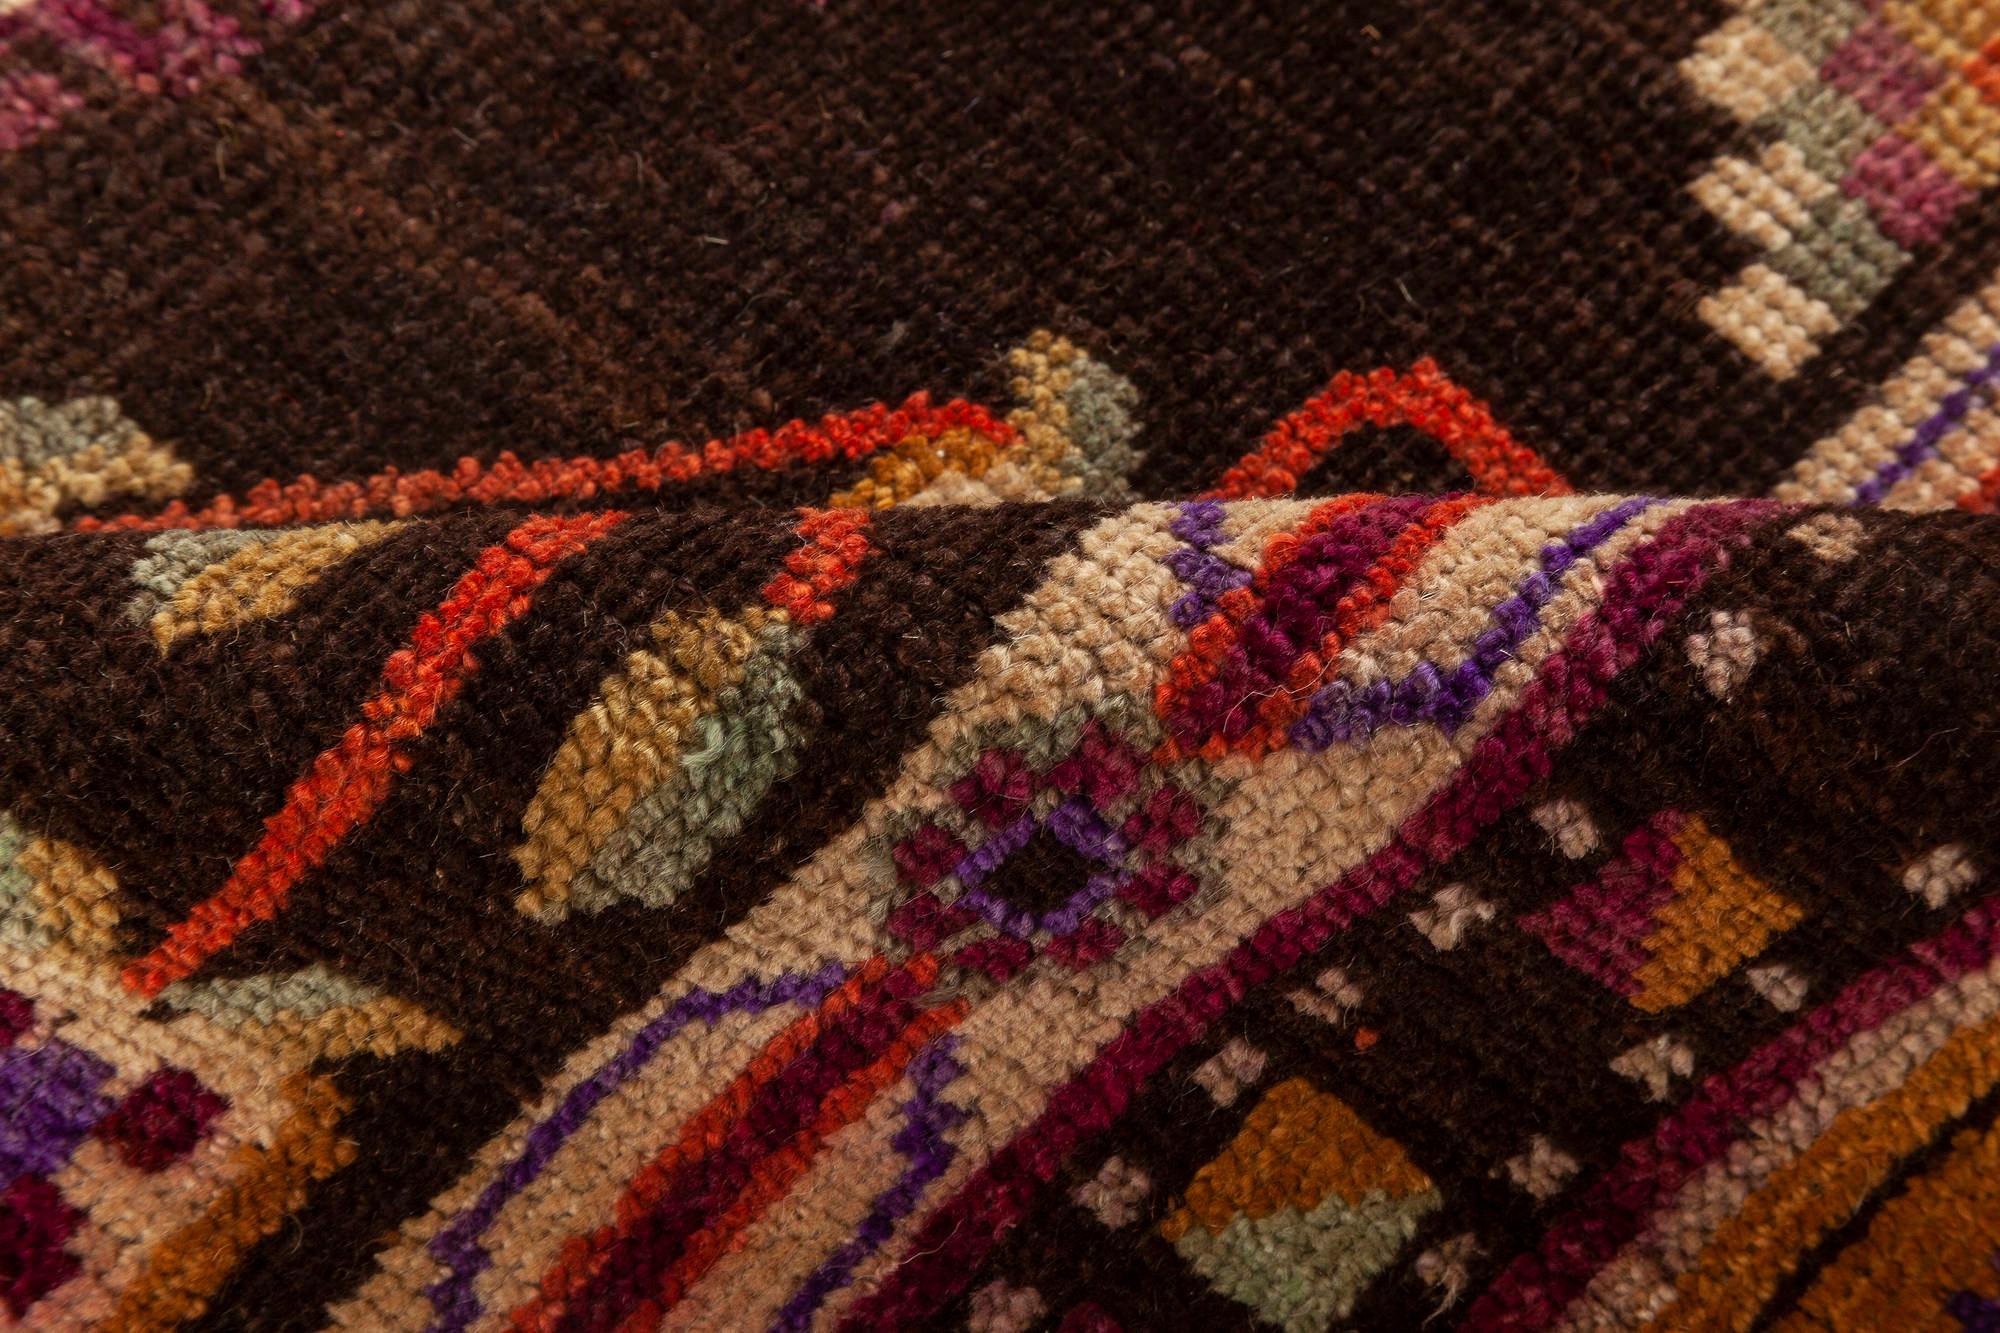 Midcentury Samarkand handmade wool rug.
Size: 5'4